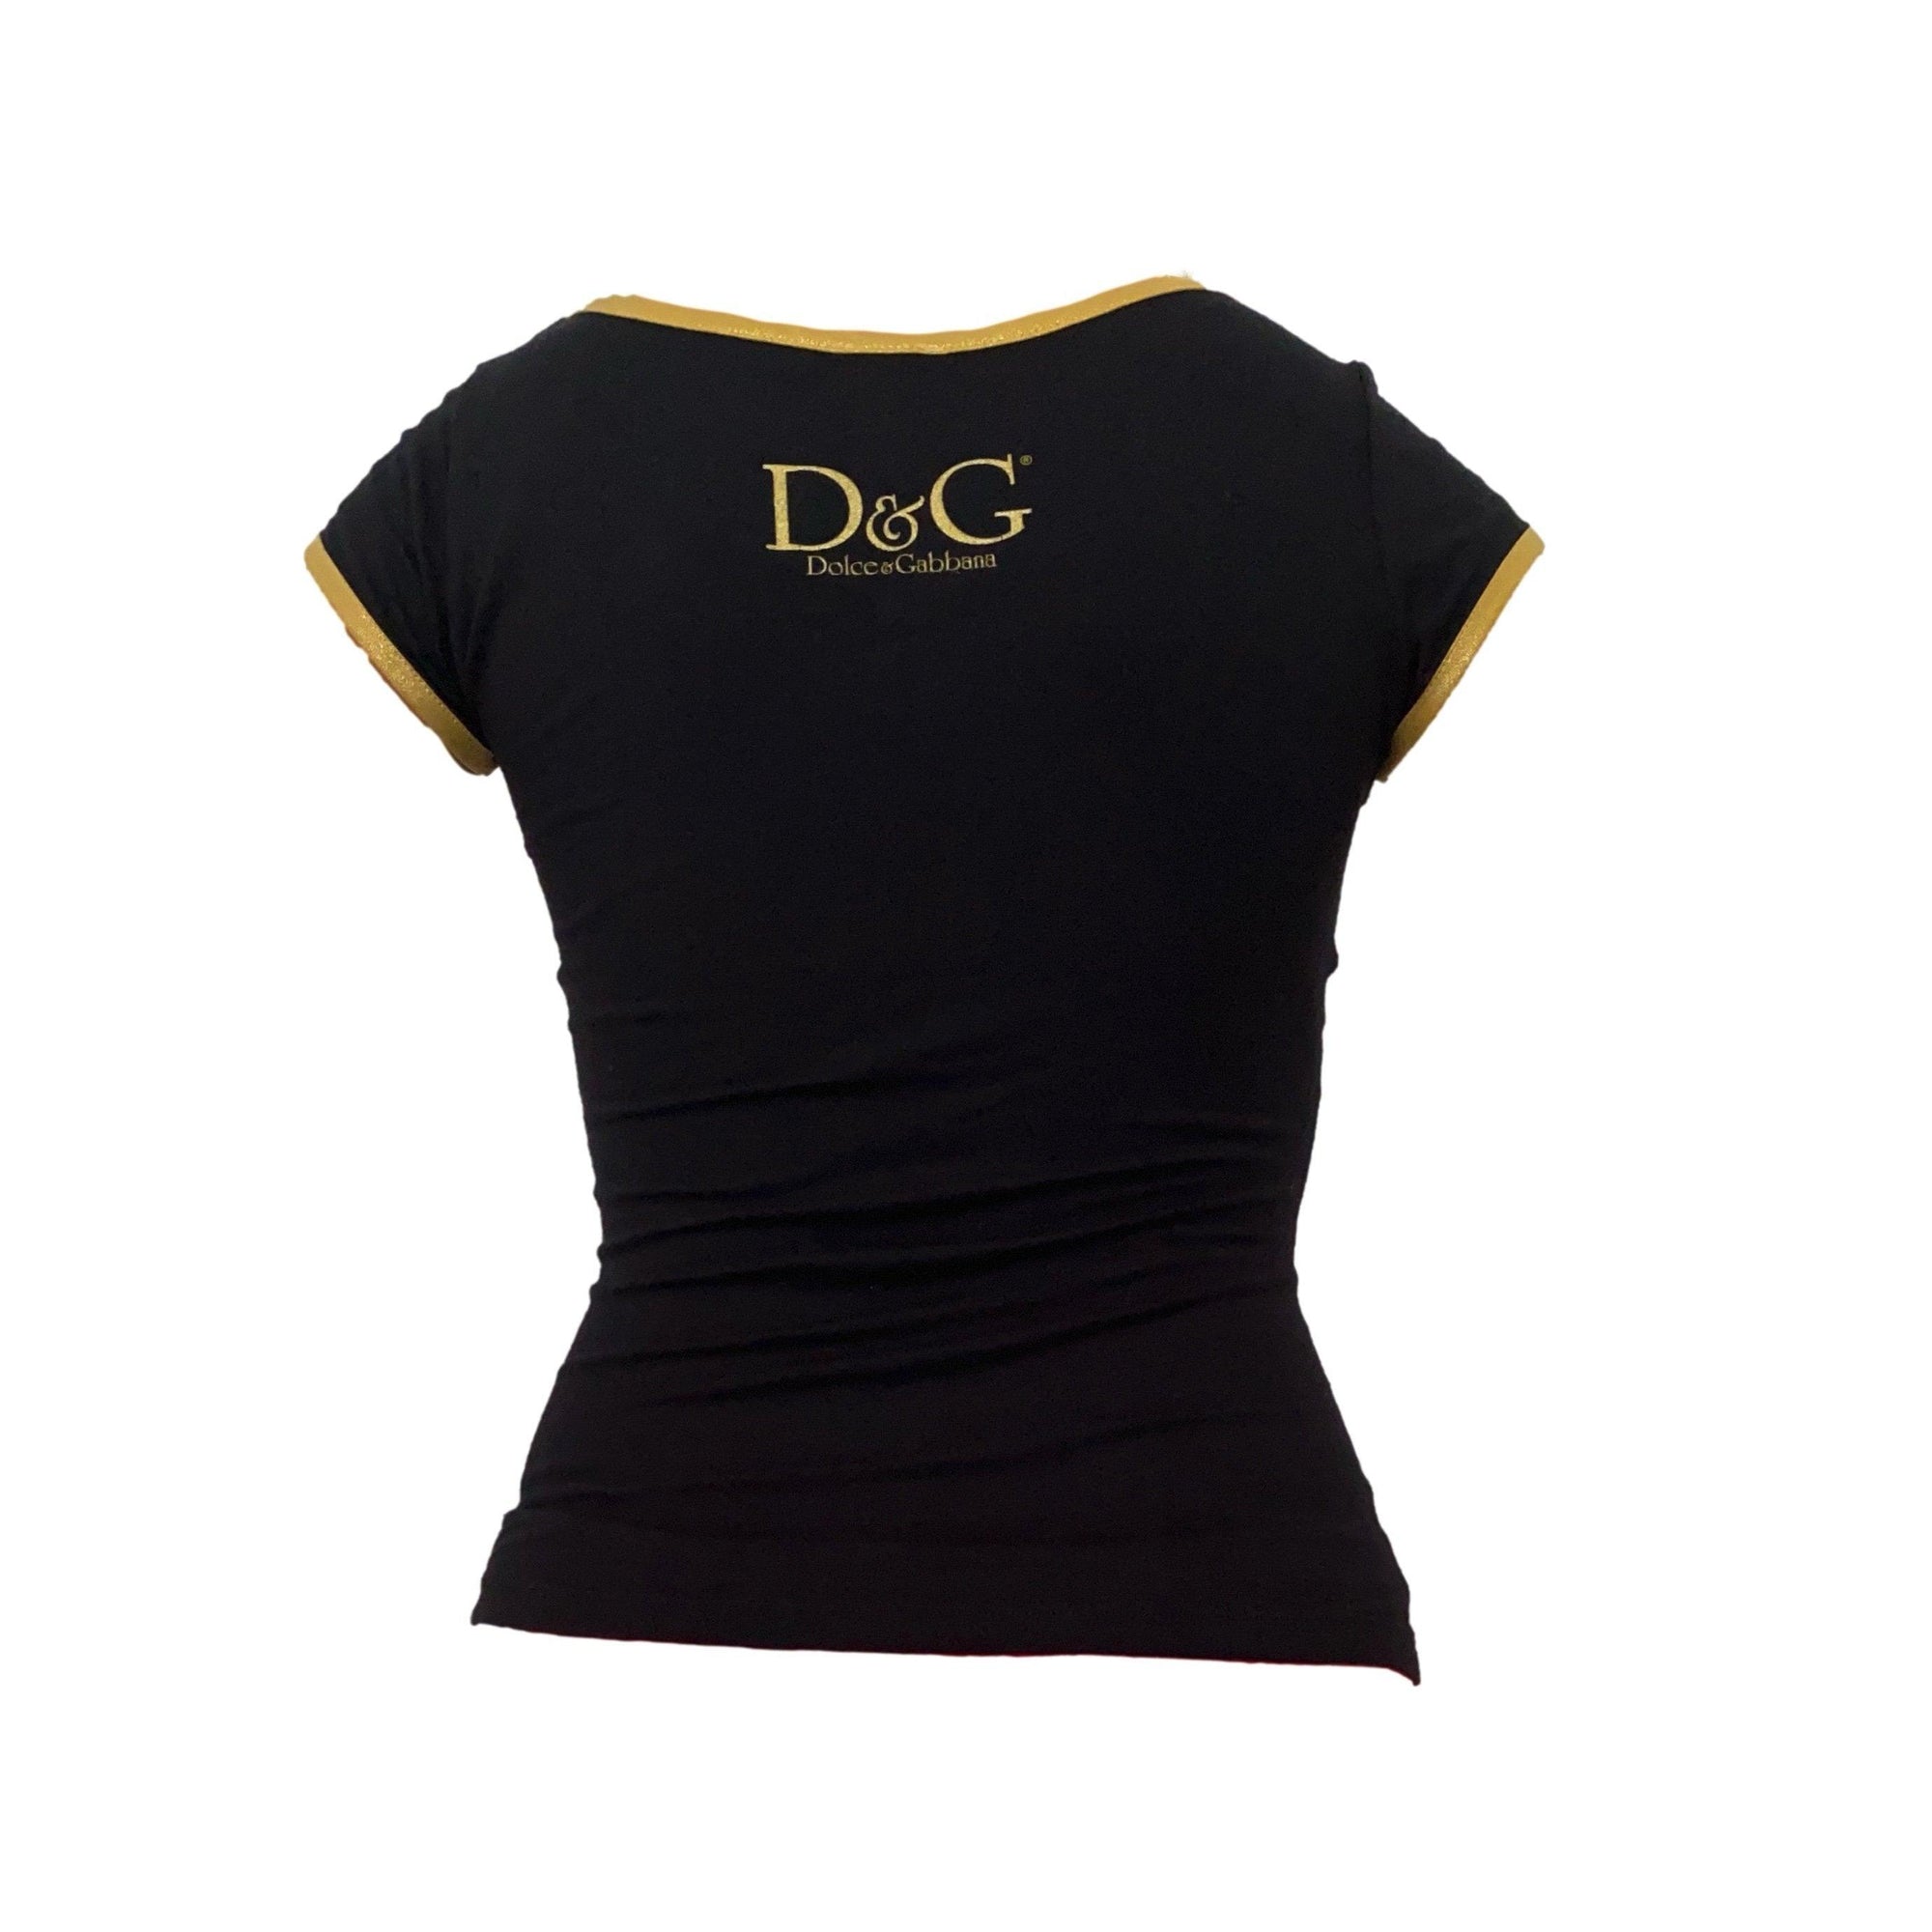 Dolce & Gabbana Black Sequin Graphic T-Shirt - Apparel